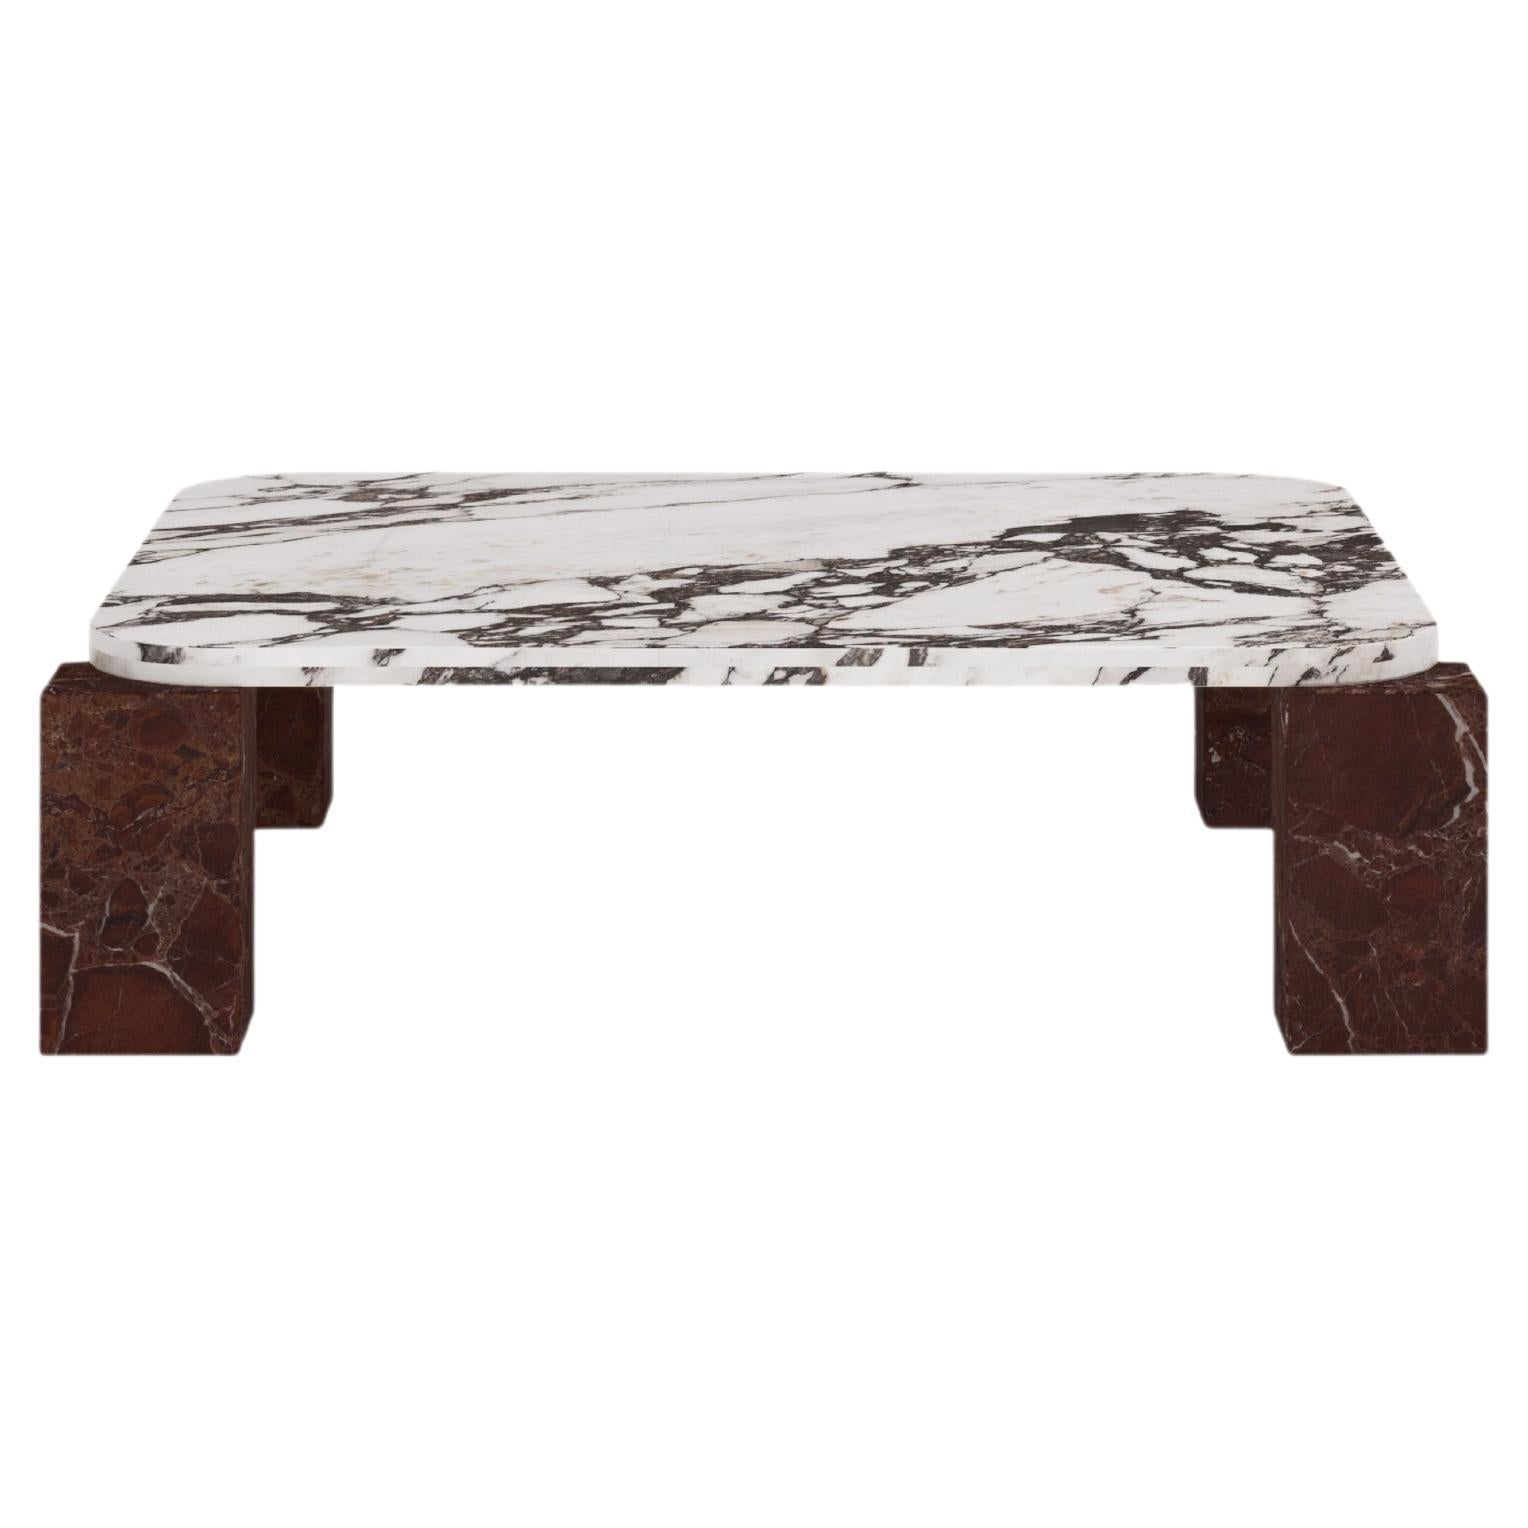 FORM(LA) Cubo Square Coffee Table 62”L x 62"W x 14”H Viola & Rosso Marble For Sale